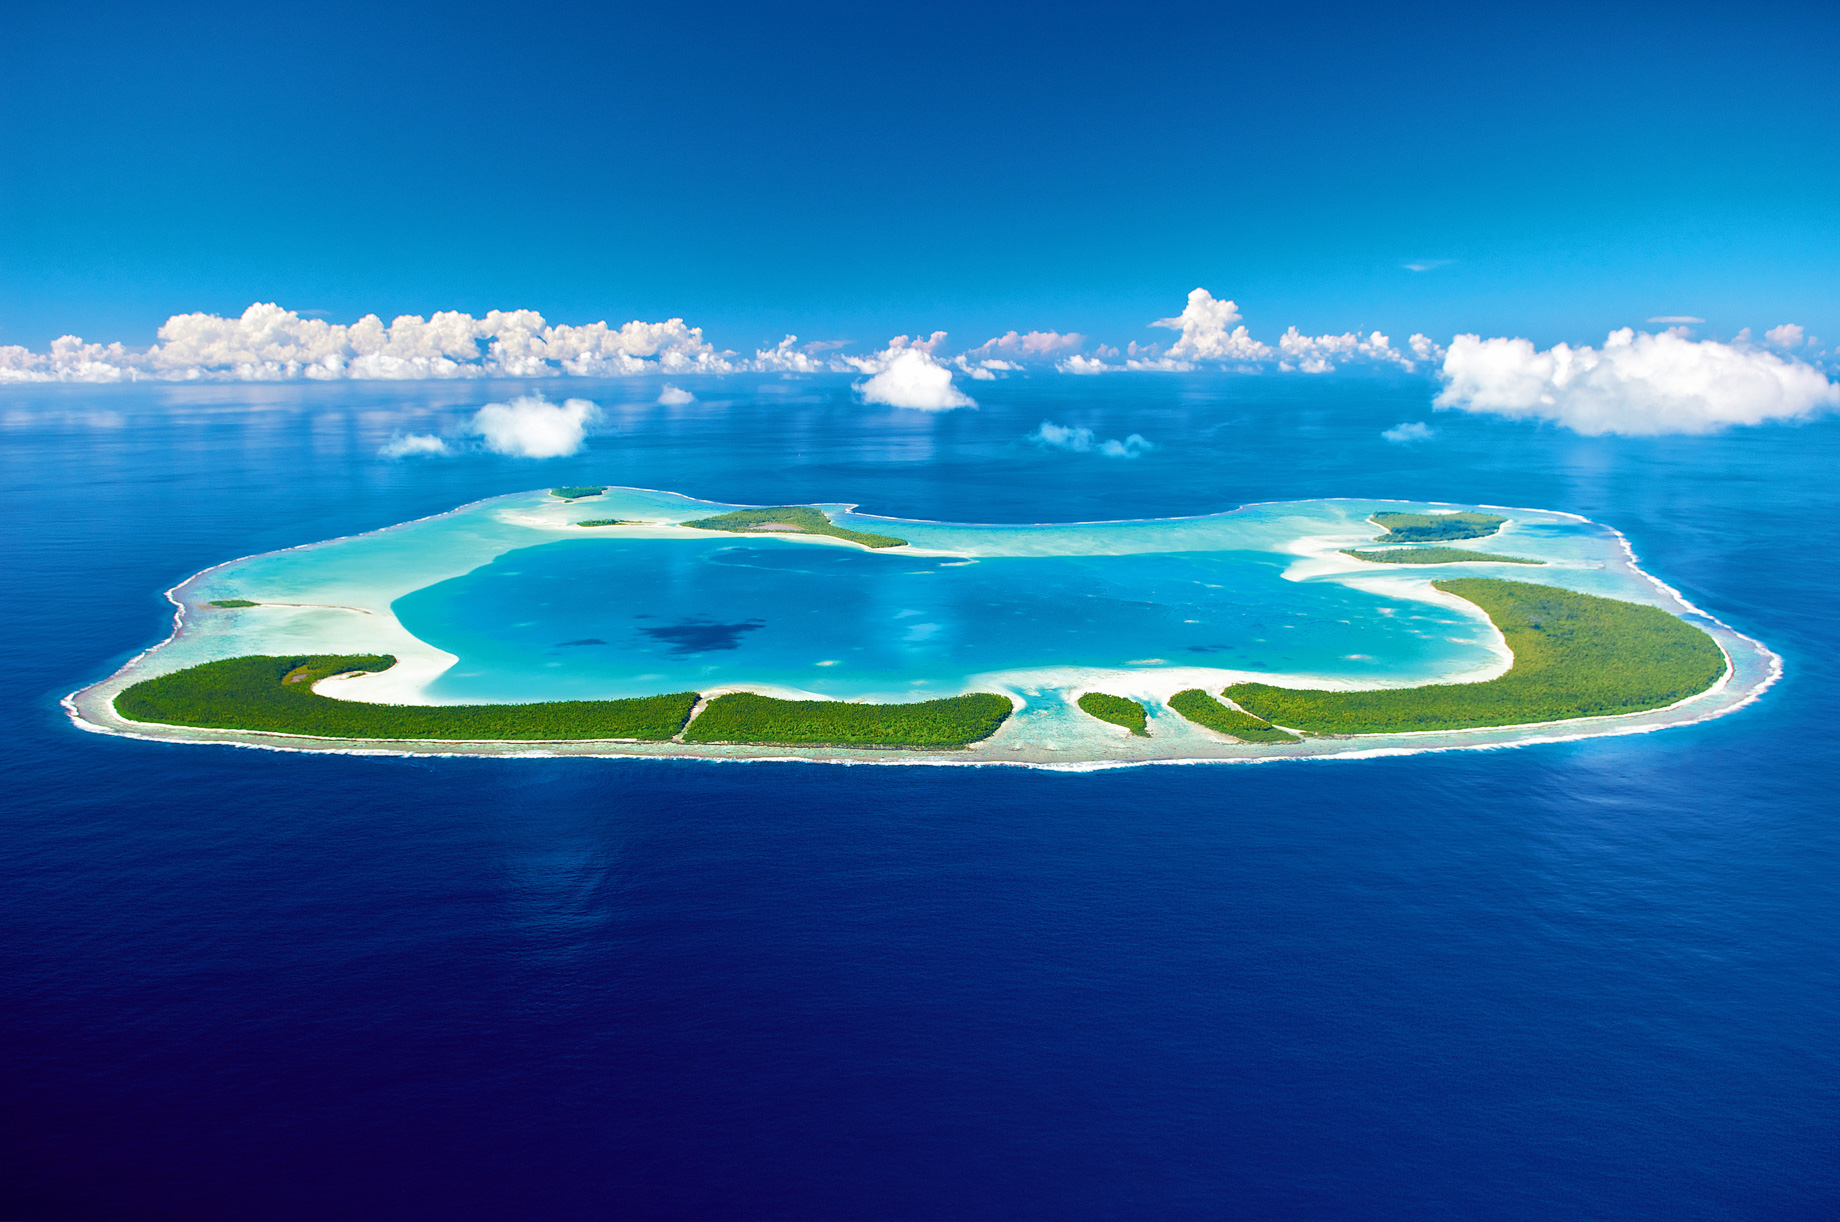 The Brando Luxury Resort - Tetiaroa Private Island, French Polynesia